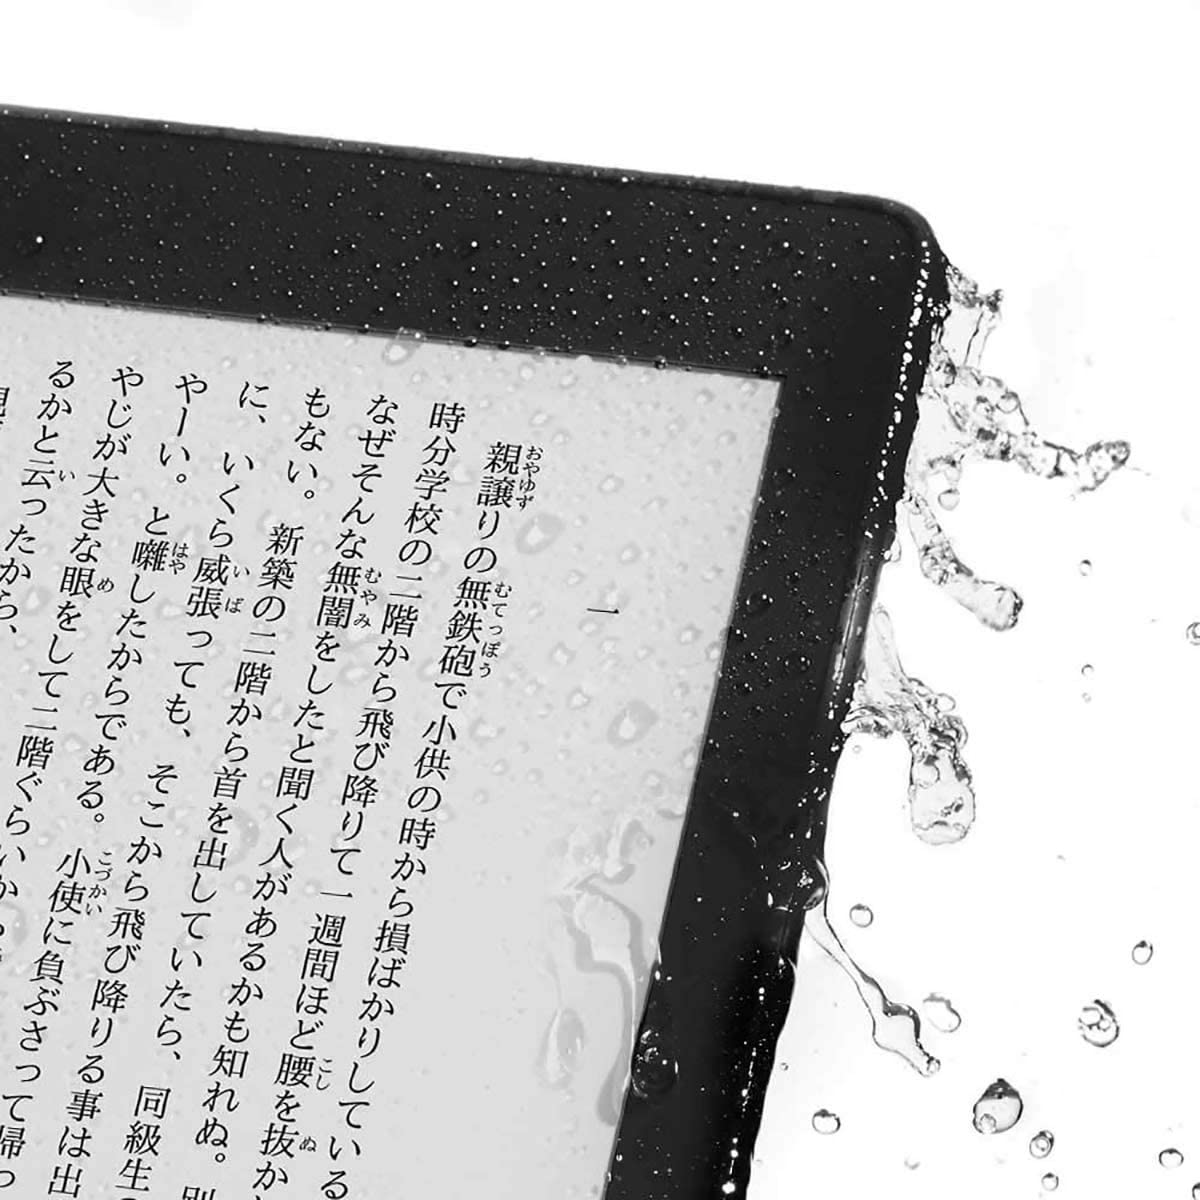 【Amazon】Kindle Paperwhite 防水機能搭載 Wi-Fi 32GB 電子書籍リーダー